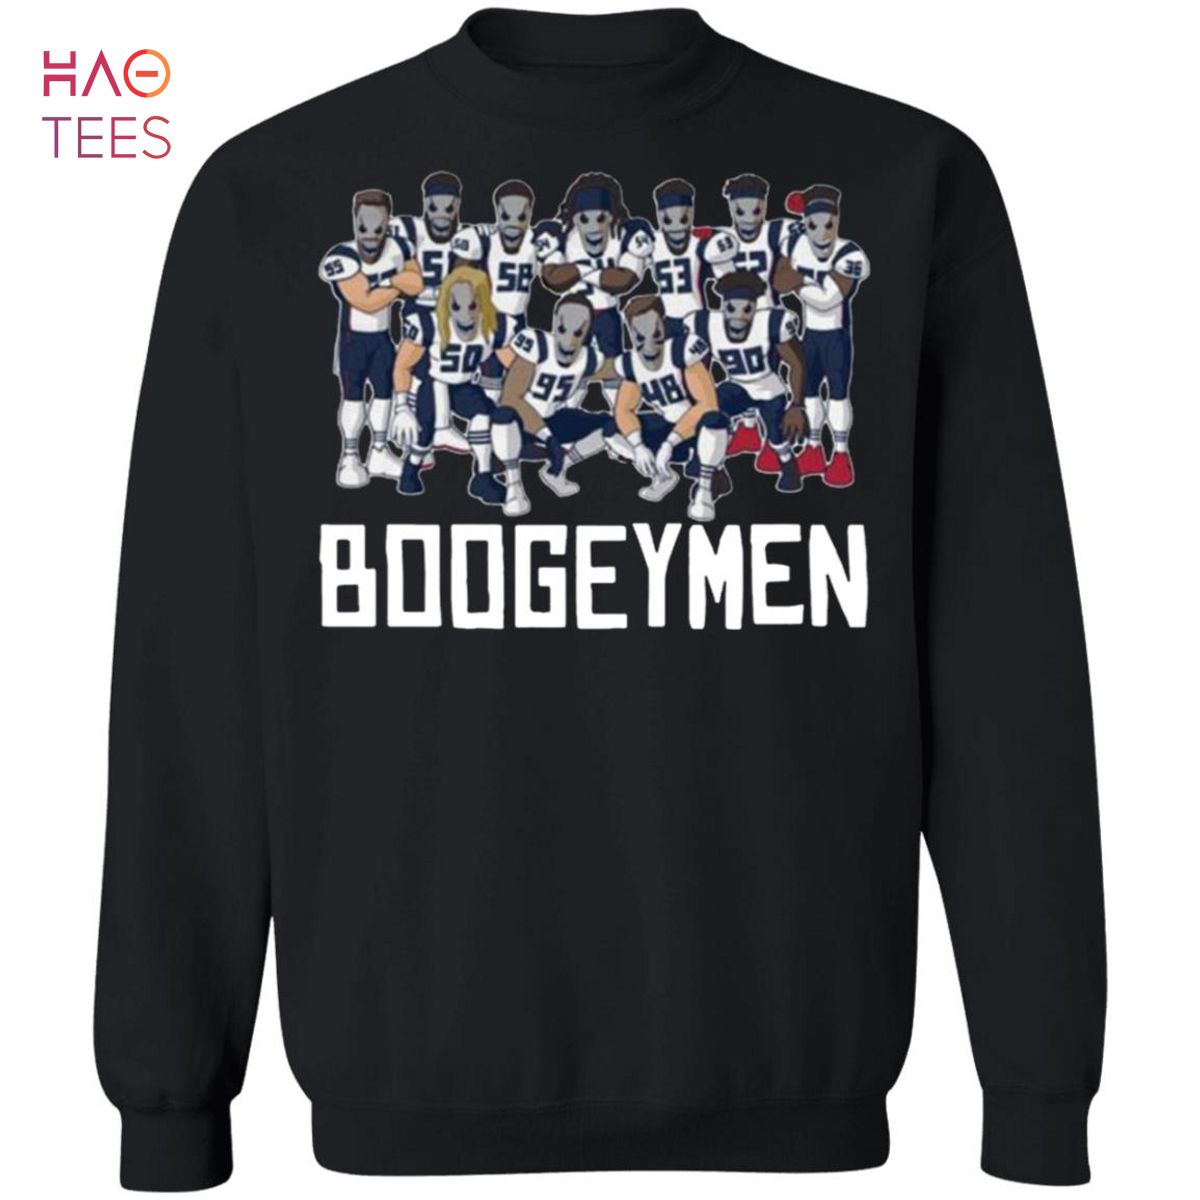 [NEW] Patriots Boogeymen Sweater